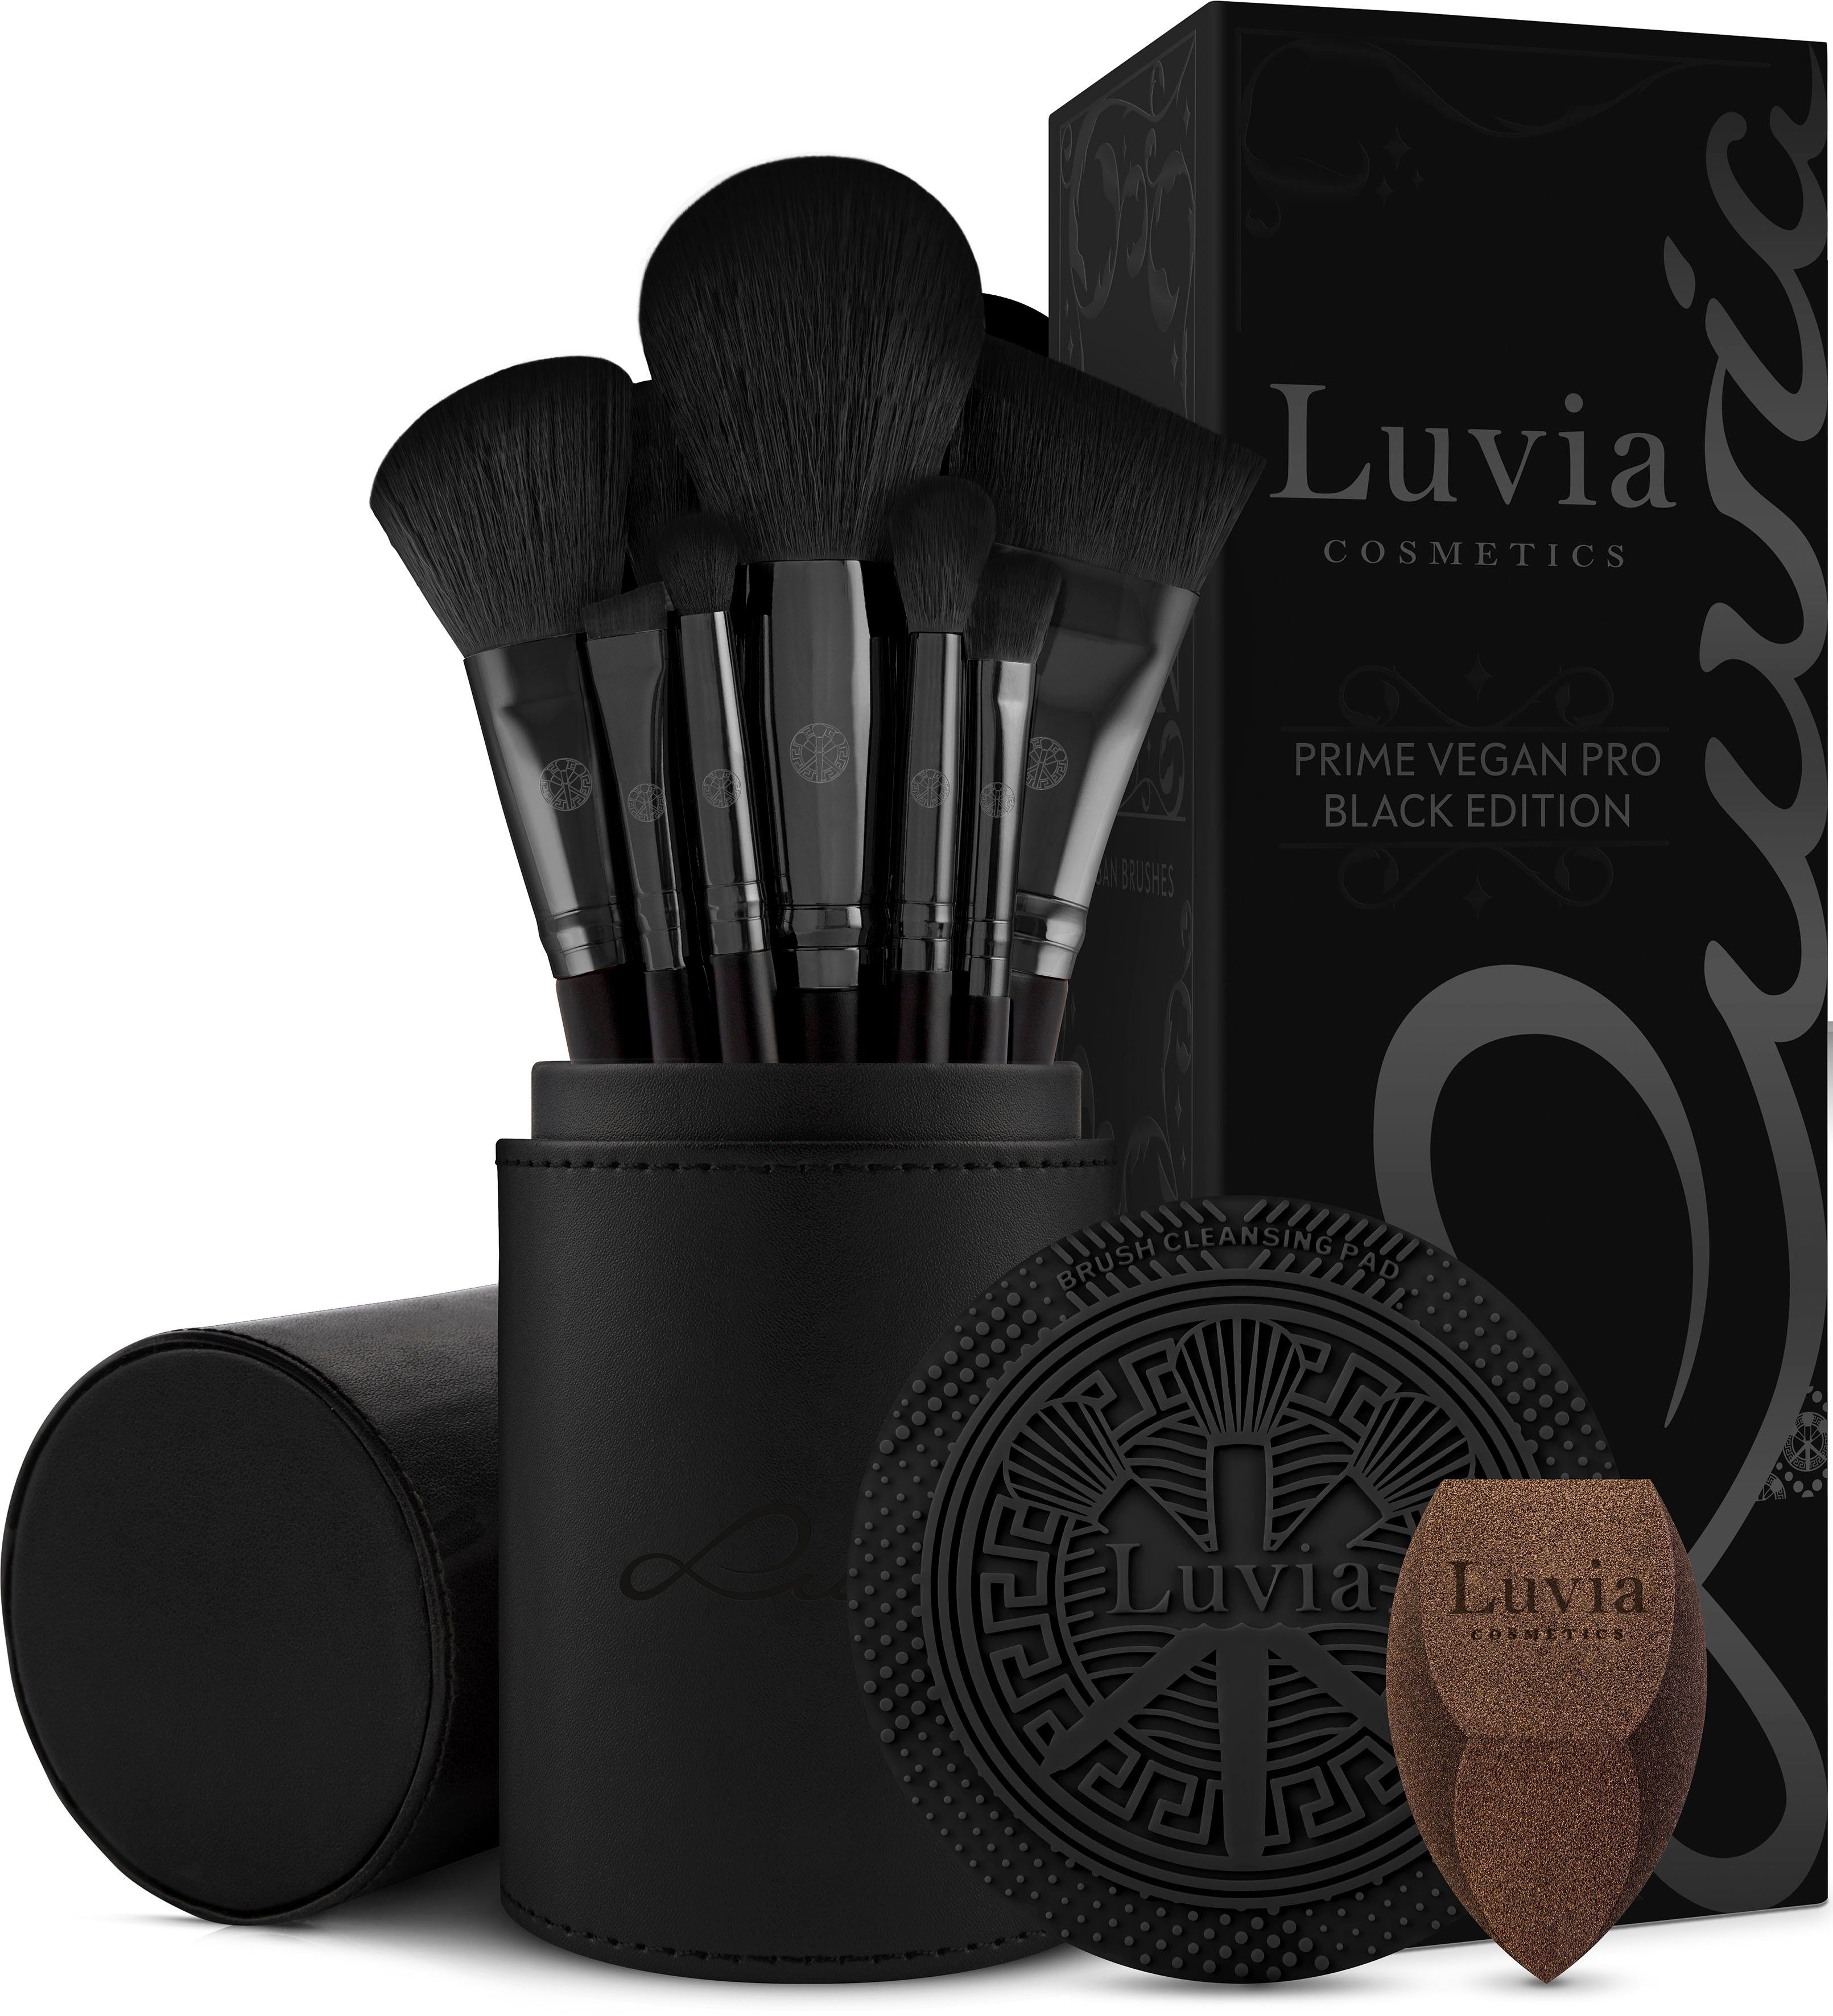 Luvia Cosmetics Prime 15 Vegan Black Pro Edition, tlg. Kosmetikpinsel-Set